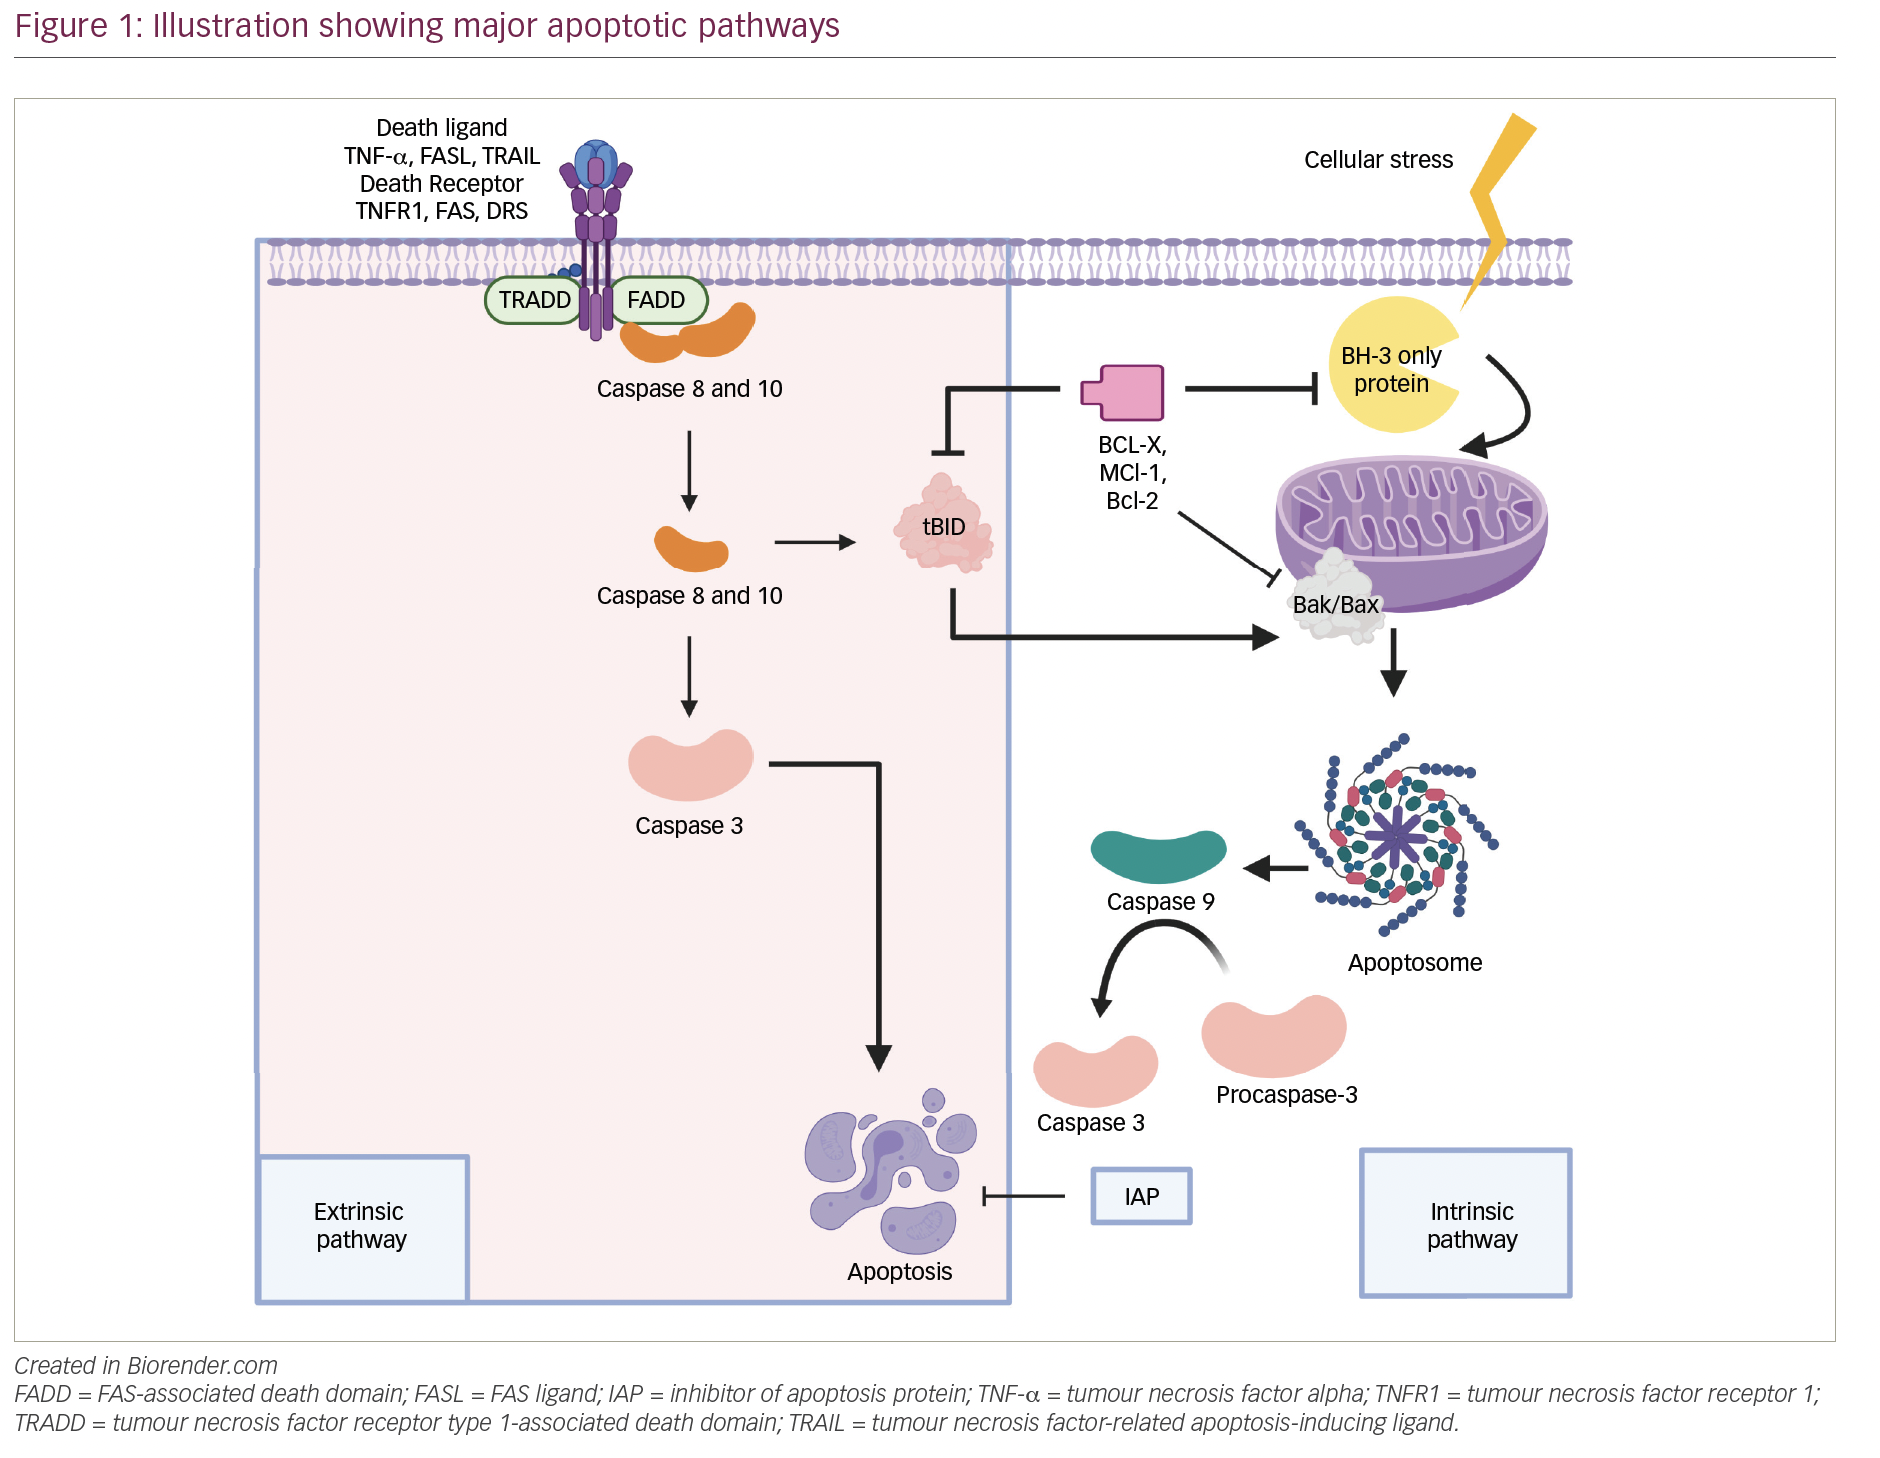 Modulating cancer cell apoptosis